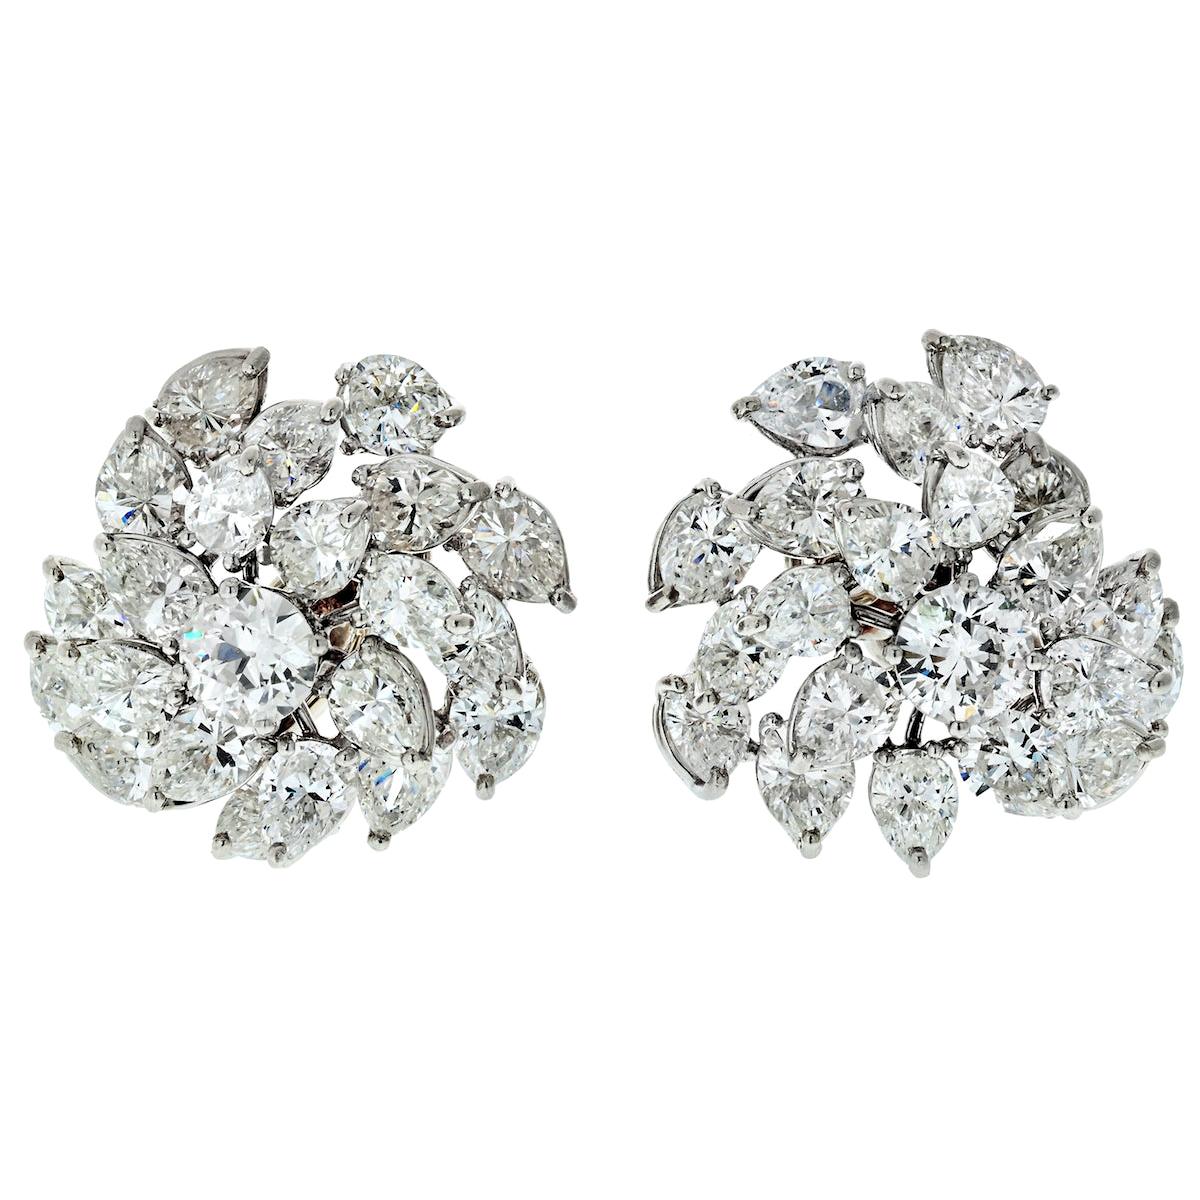 17 Carat Diamond Cluster Earrings in Platinum